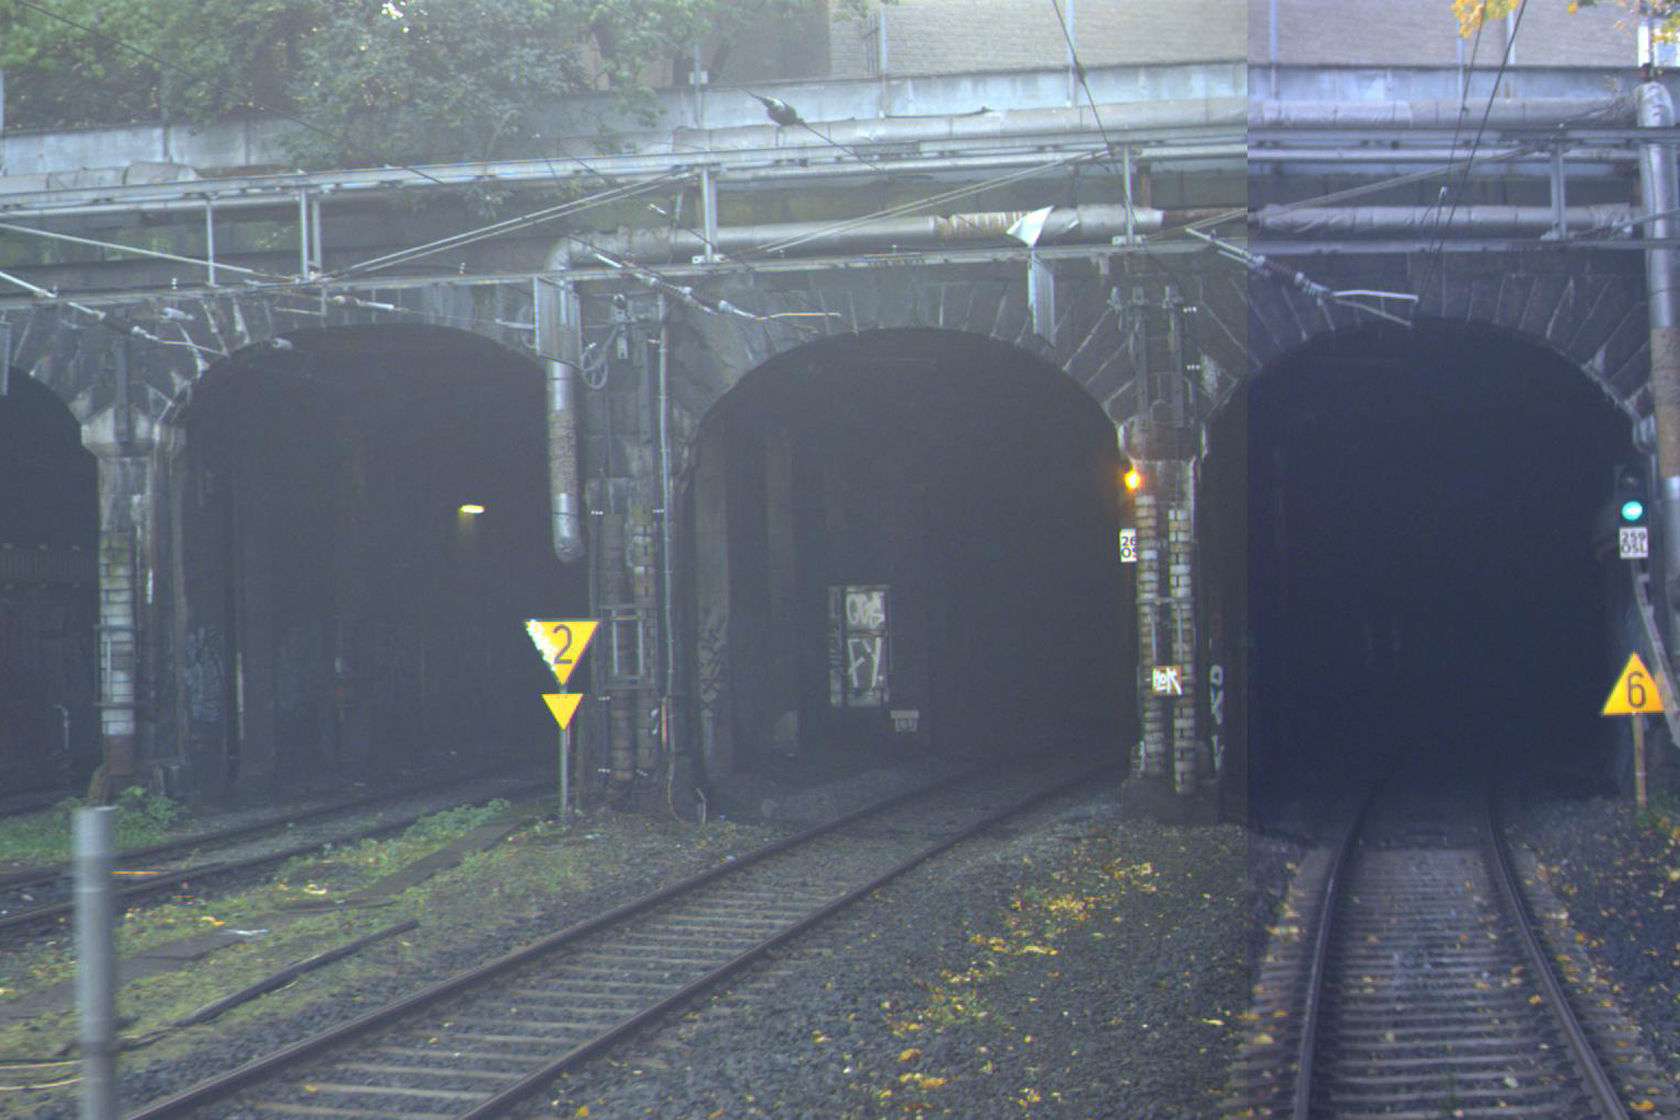 Tracks and tunnel at Loenga station